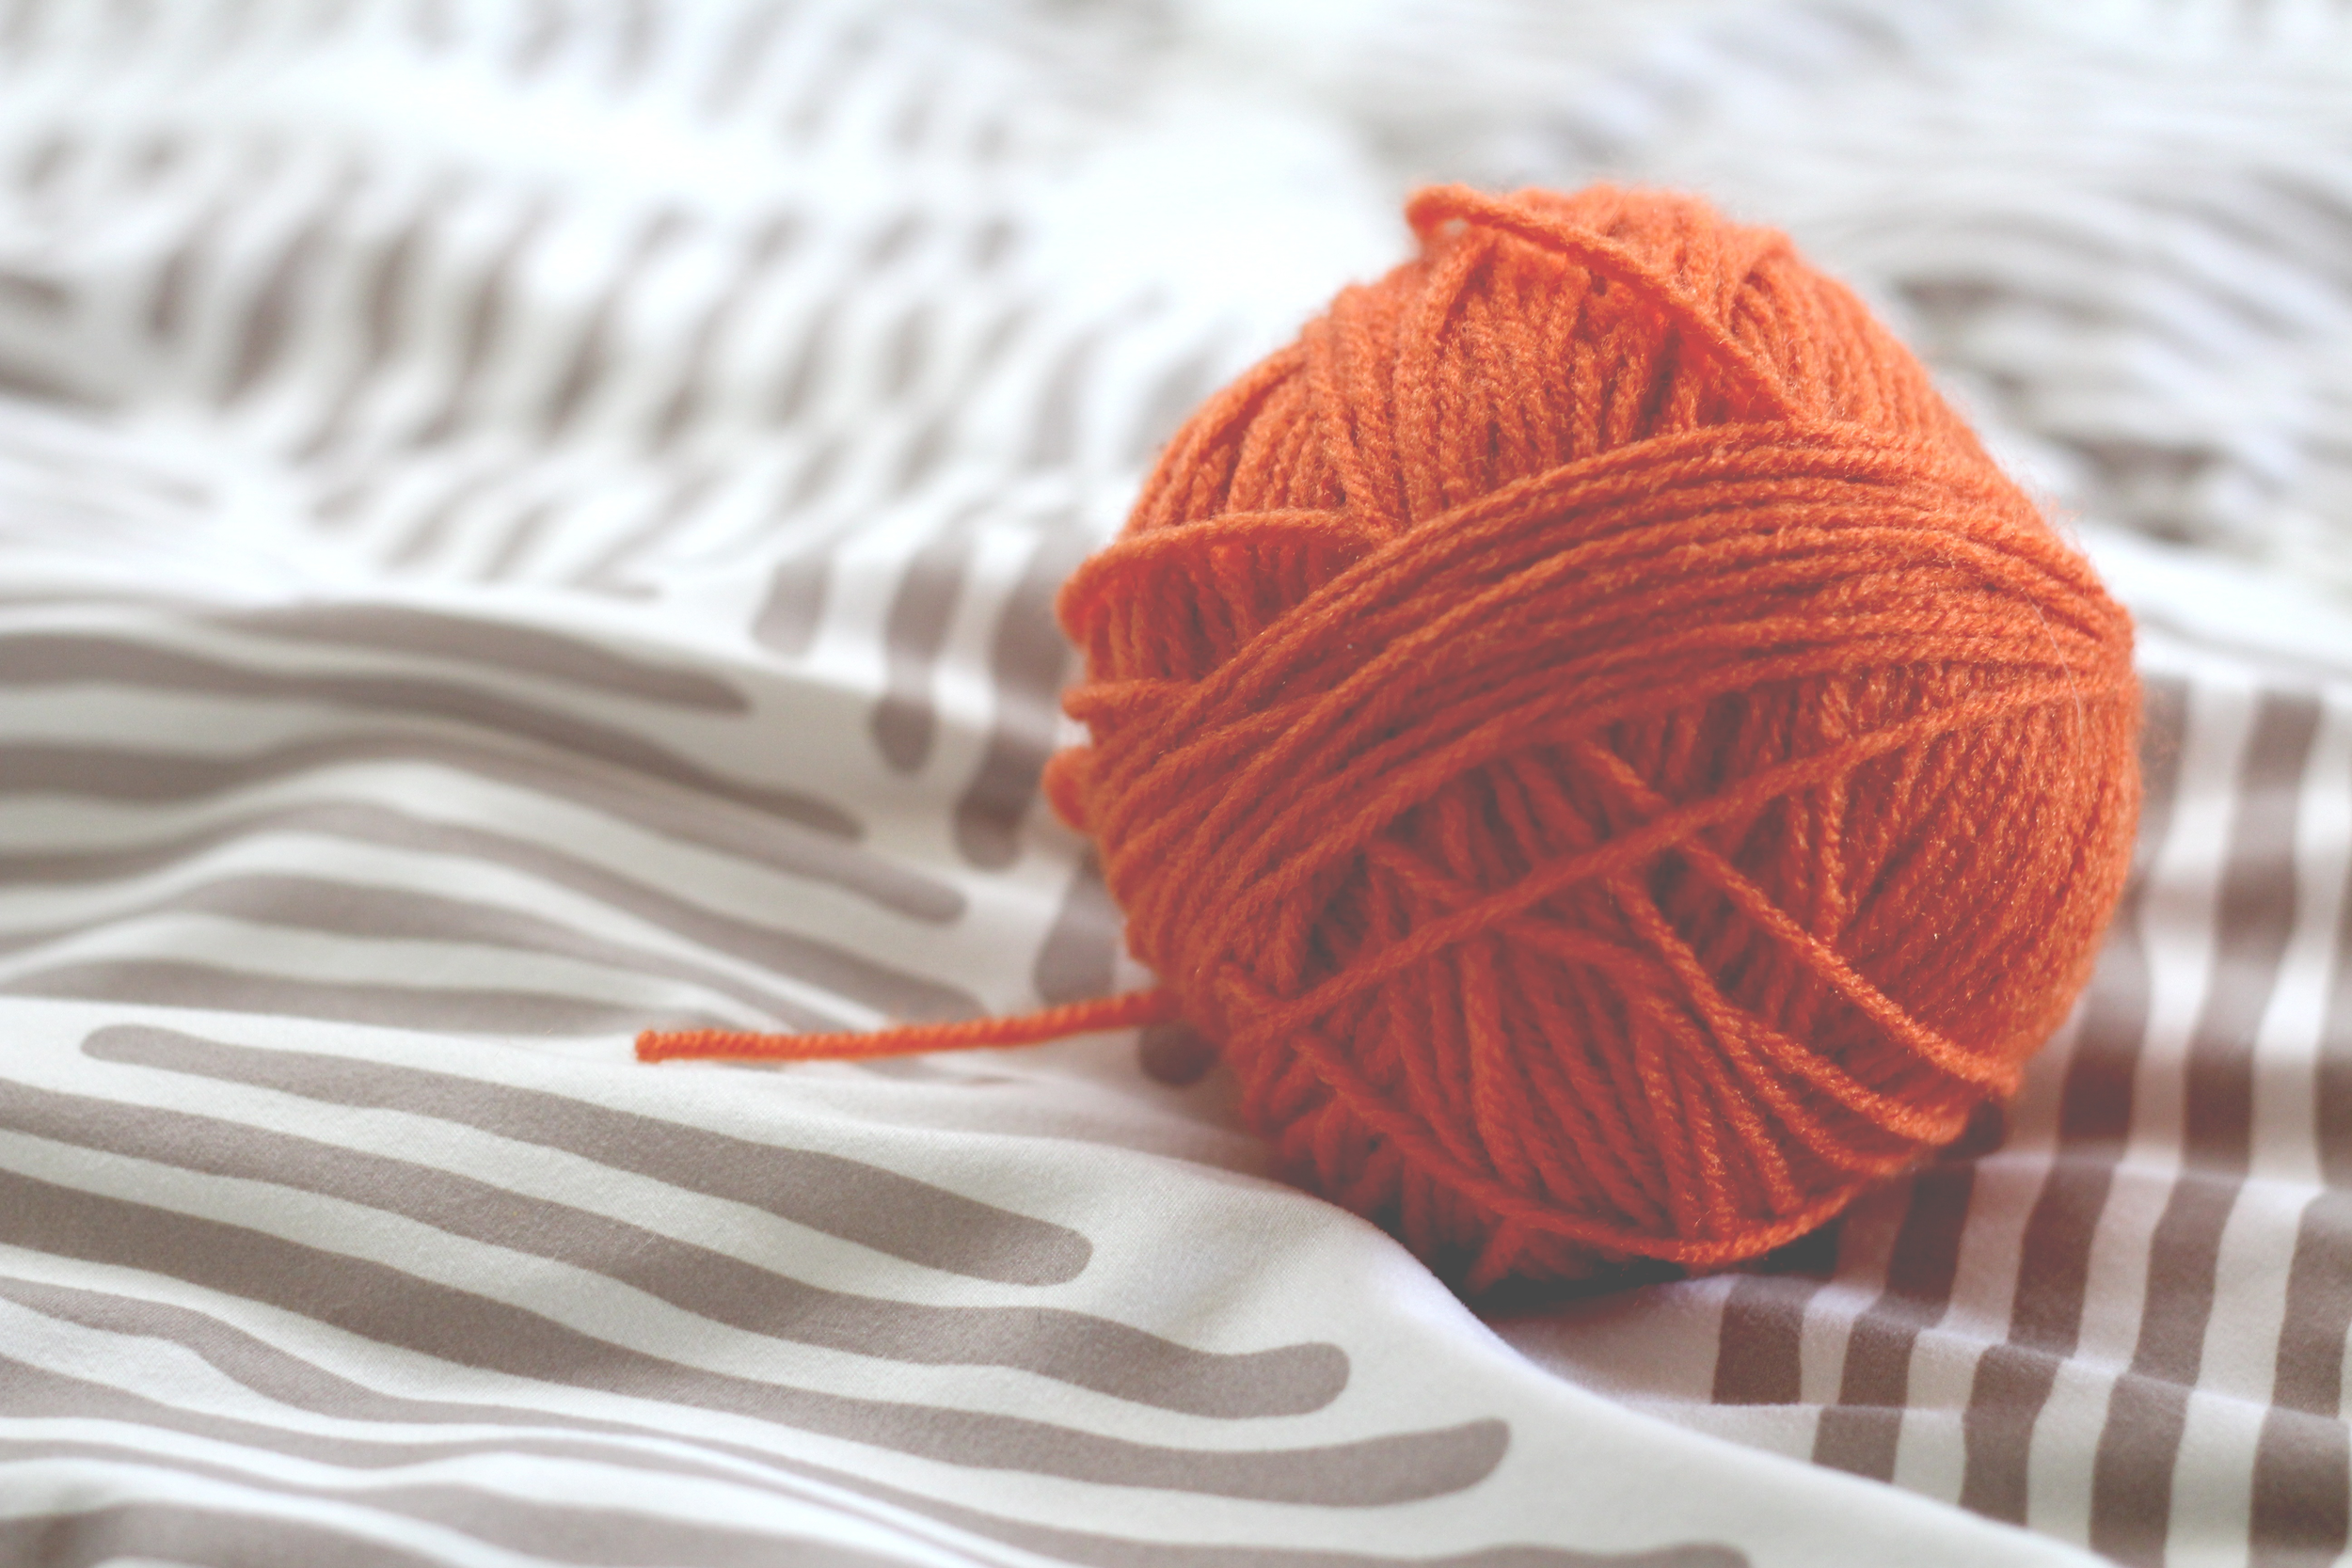 Knitting/Sewing